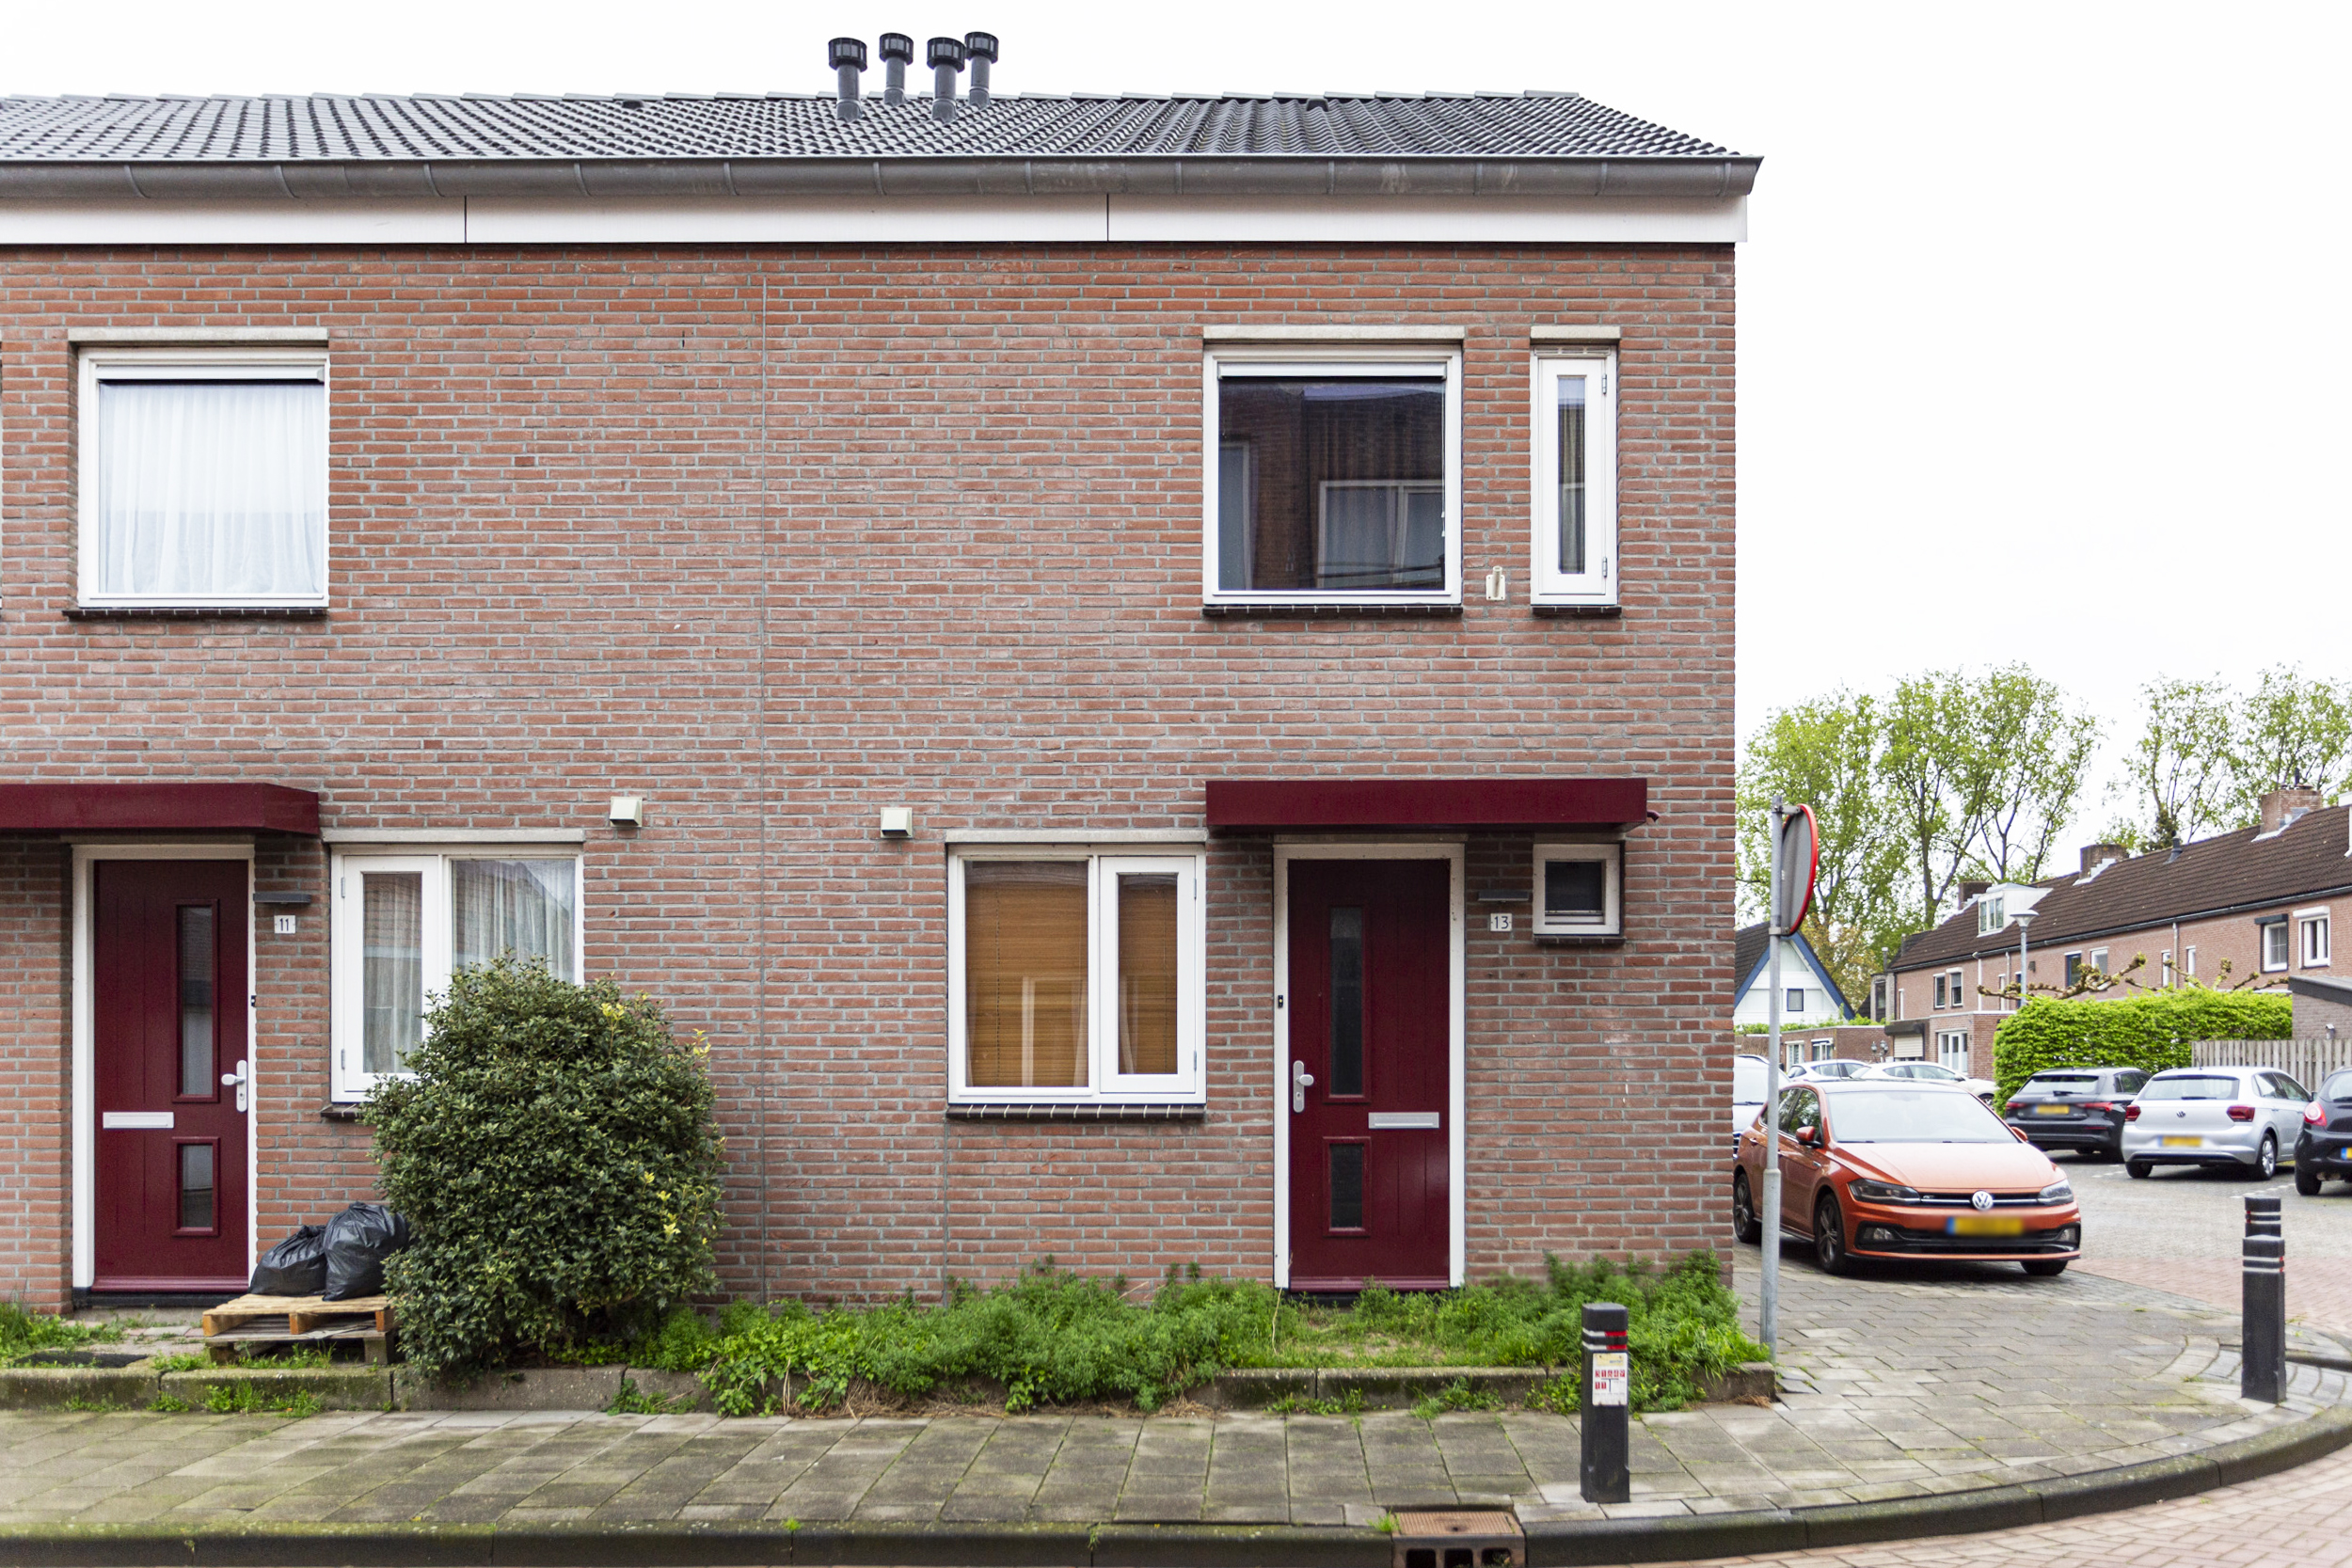 Oosterstraat 13, 4791 HH Klundert, Nederland